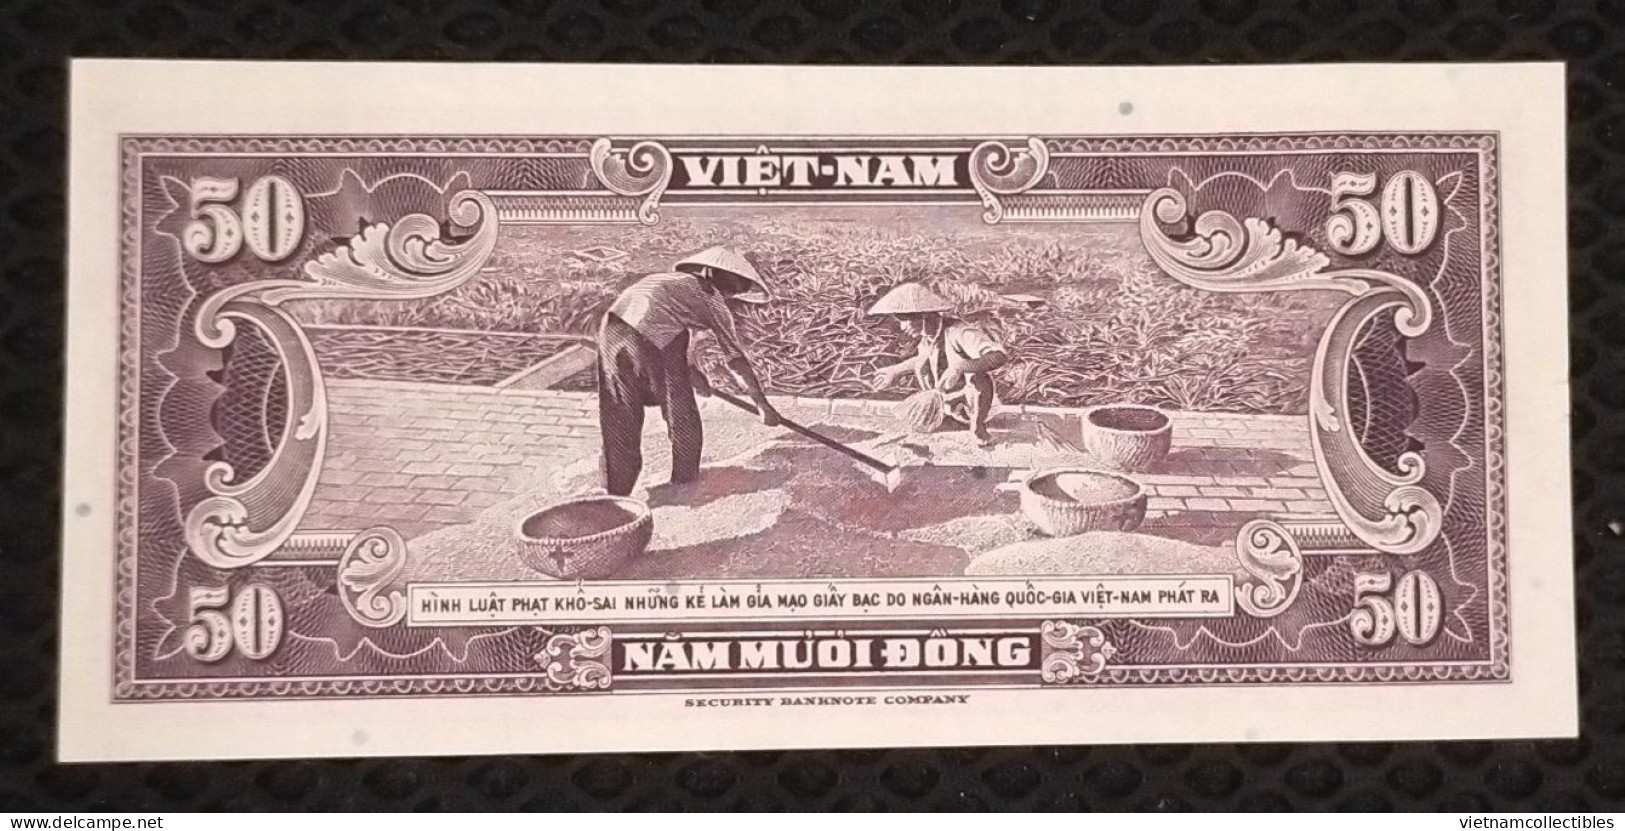 South Vietnam Viet Nam 50 Dong UNC Banknote Note 1956 - Pick # 07 / 02 Photos - Vietnam